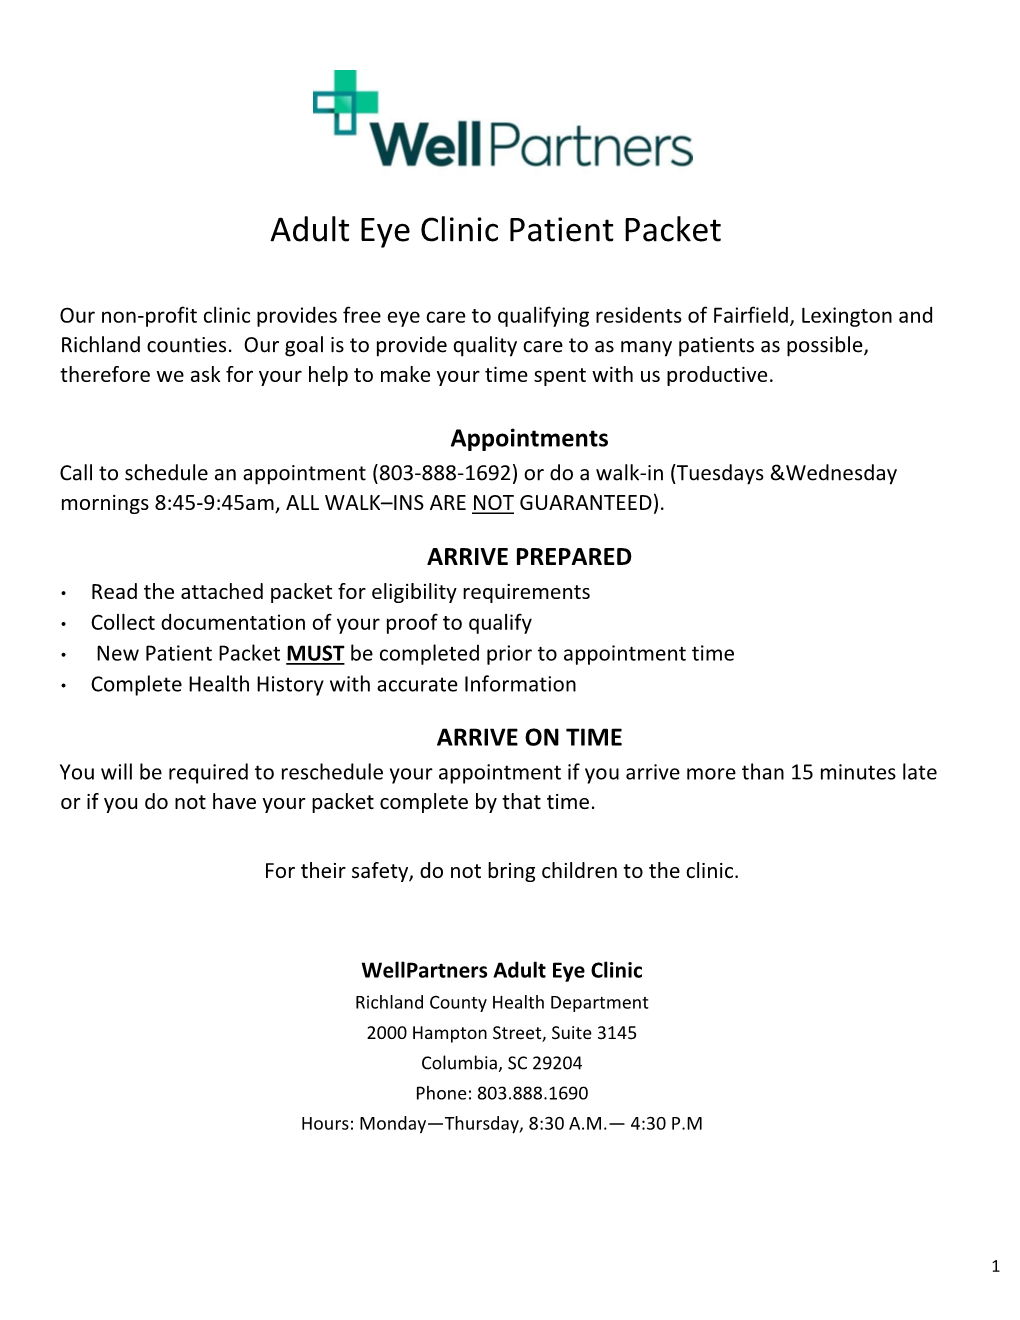 Adult Eye Packet